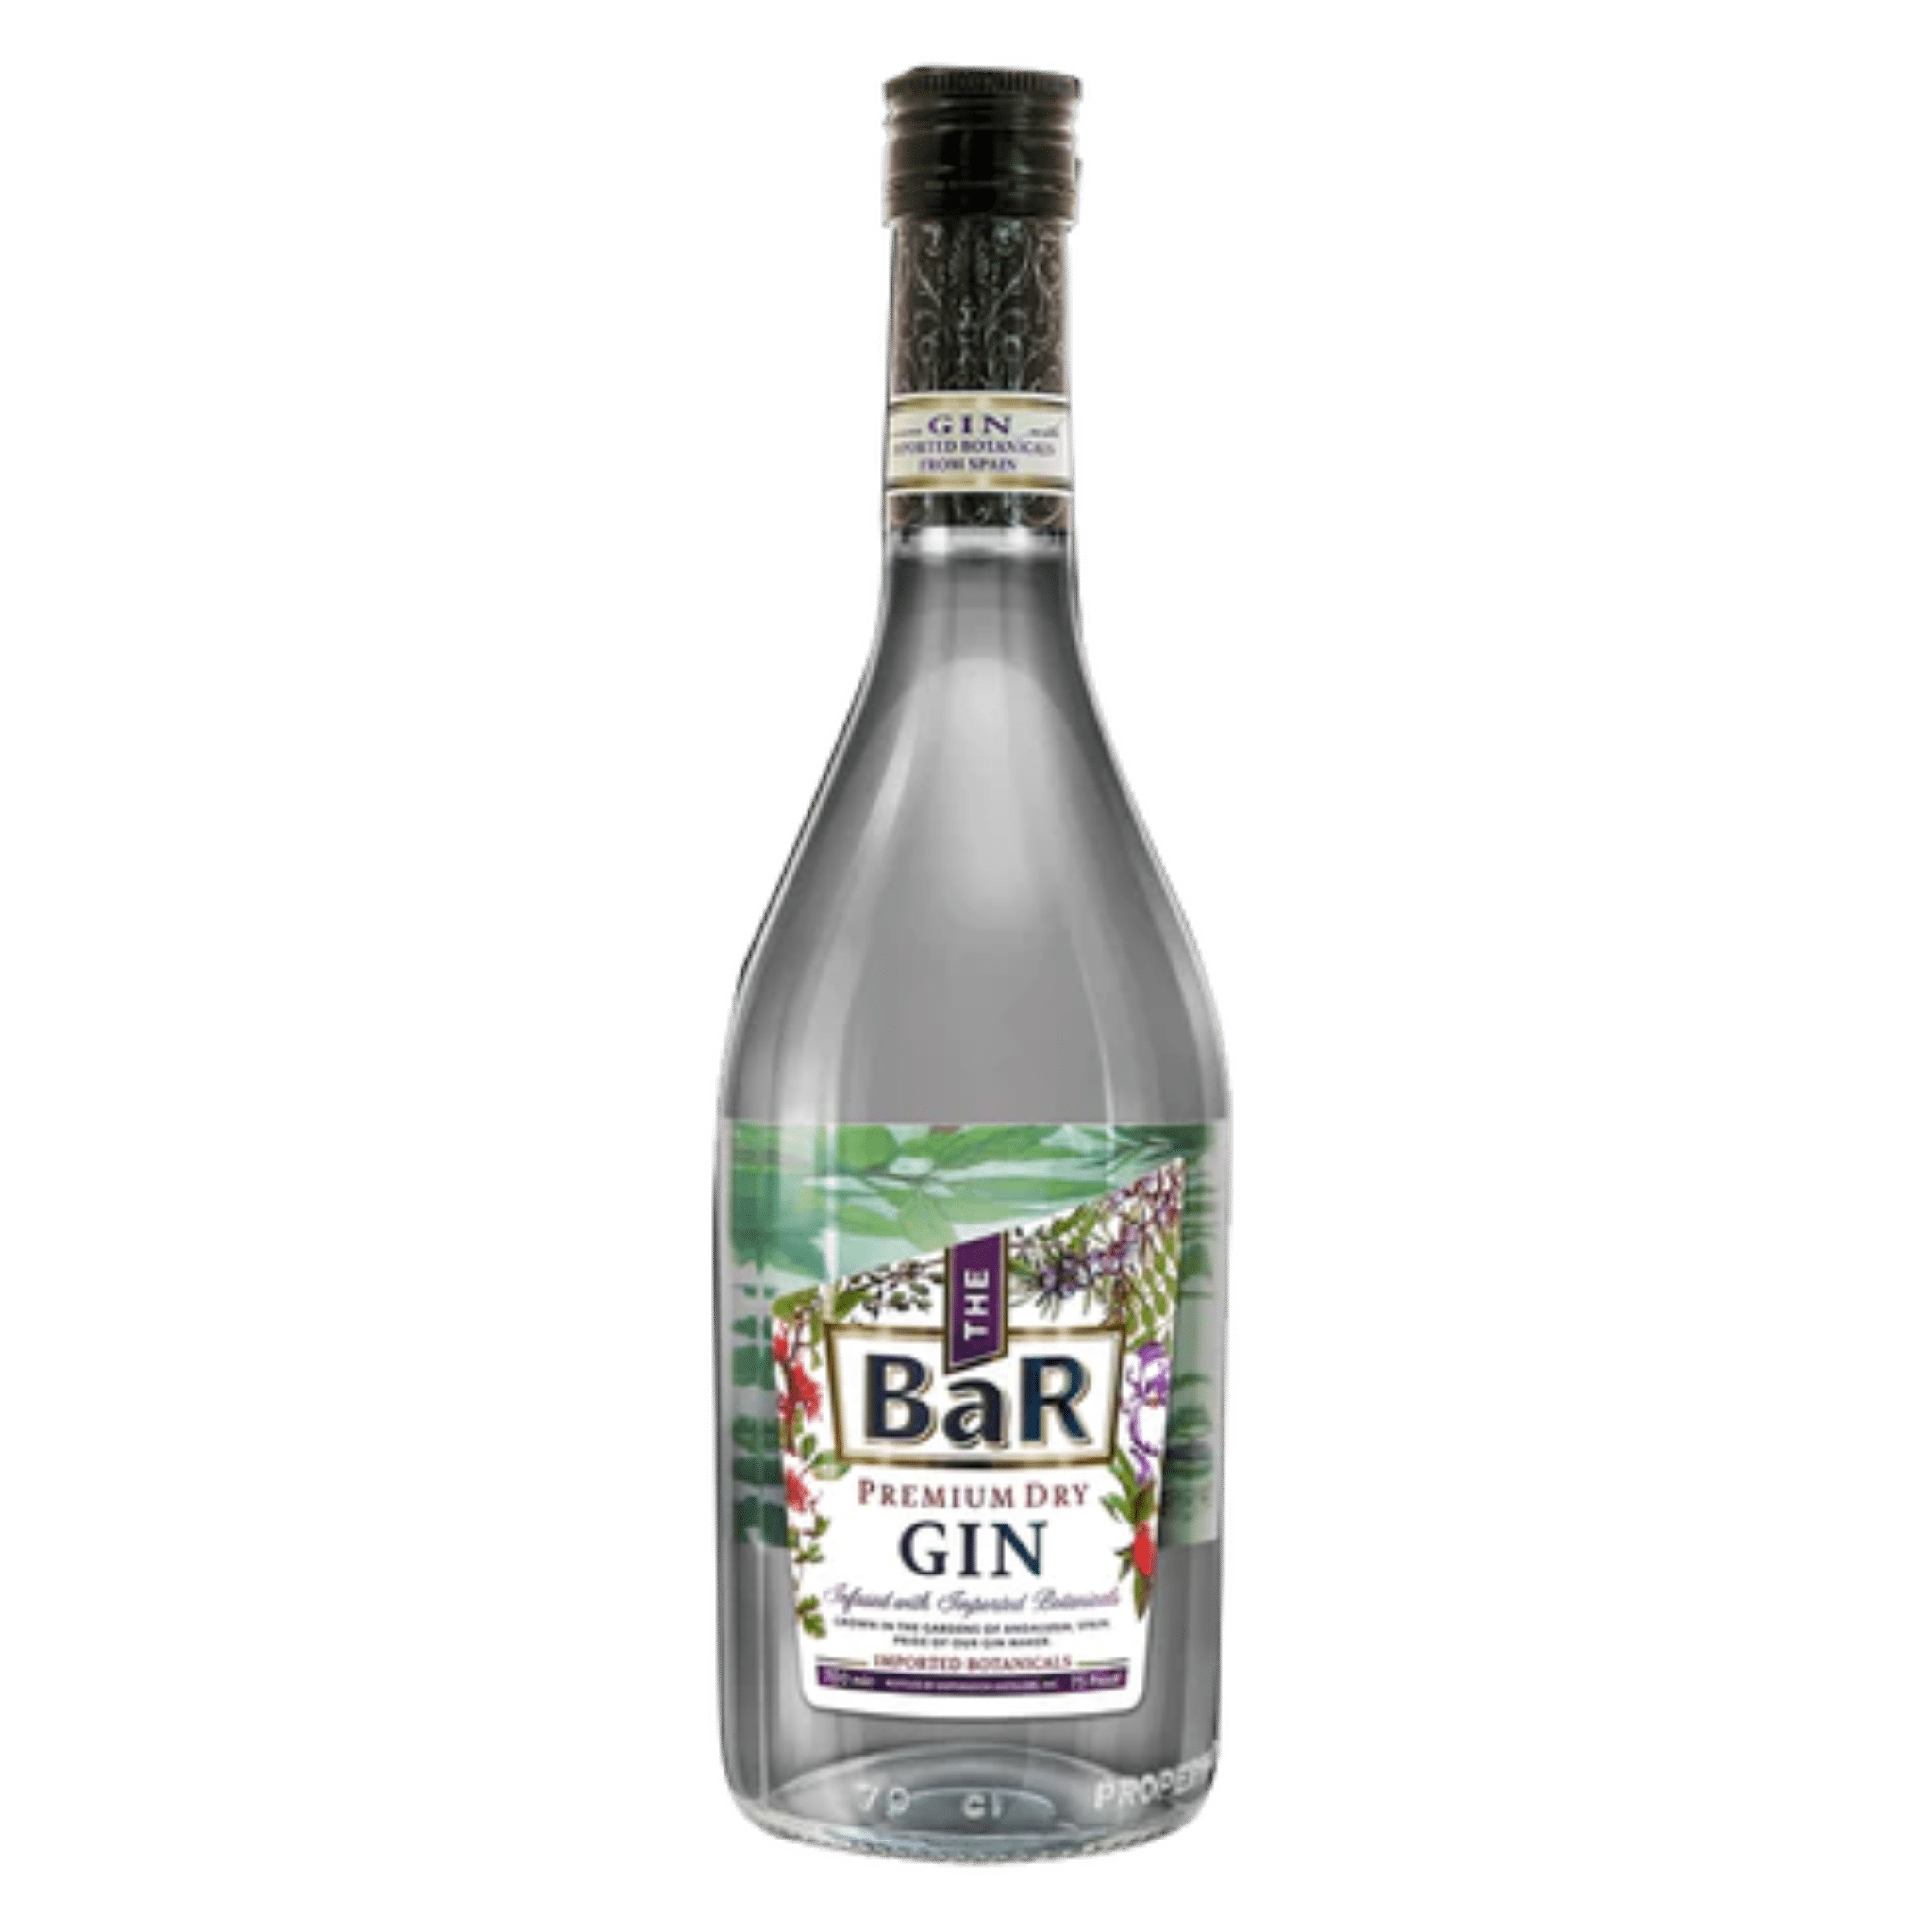 The Bar Premium Dry Gin